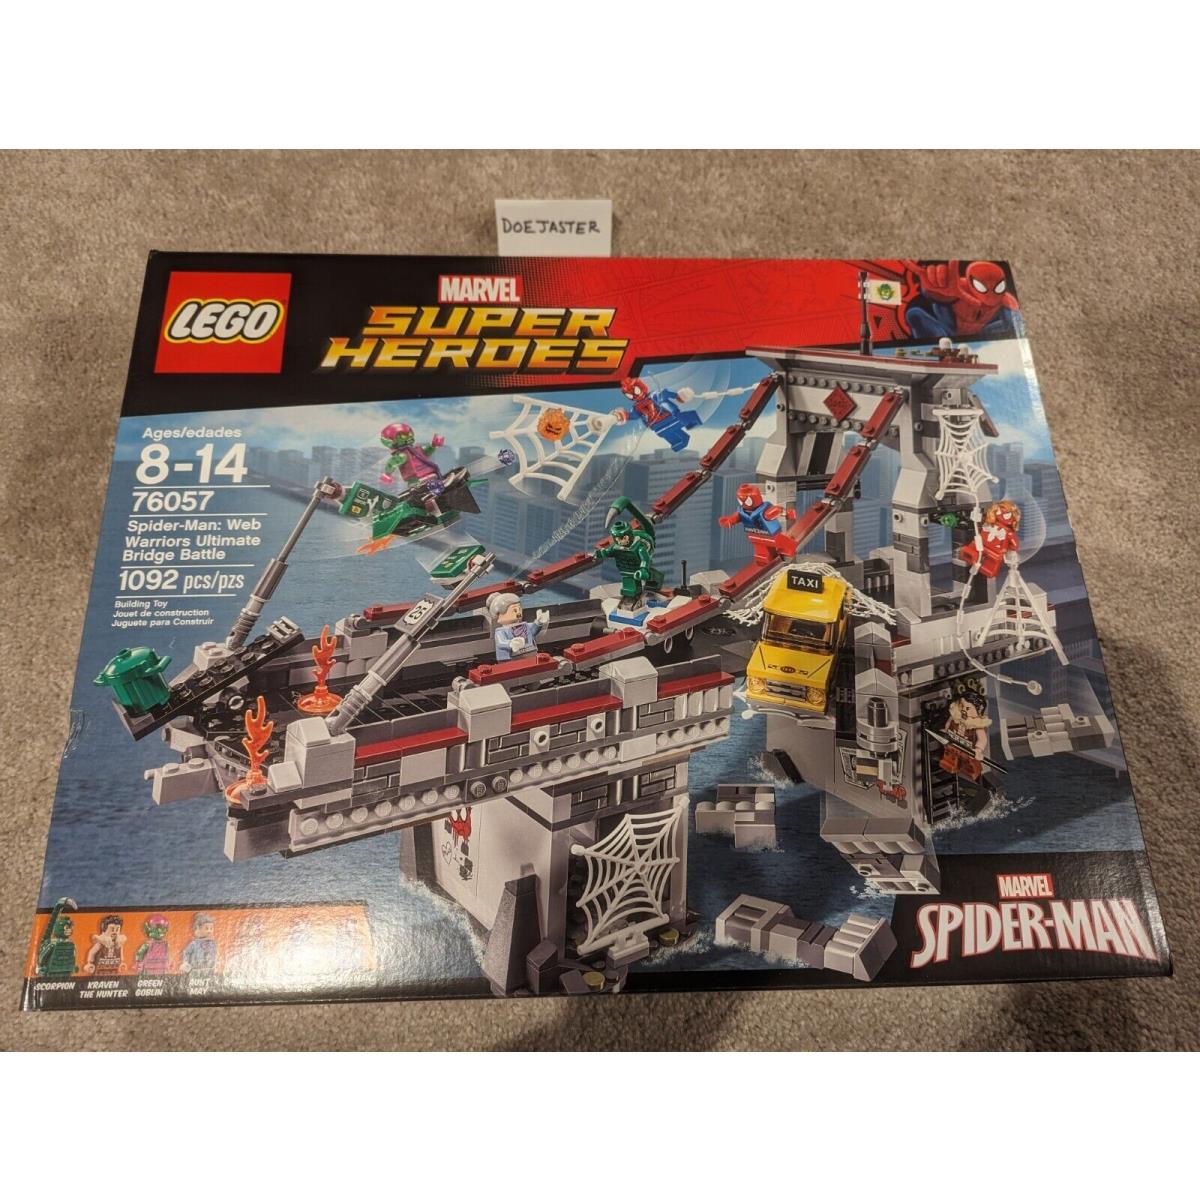 Lego 76057 Spider-man: Web Warriors Ultimate Bridge Battle - - 2016 - Marvel